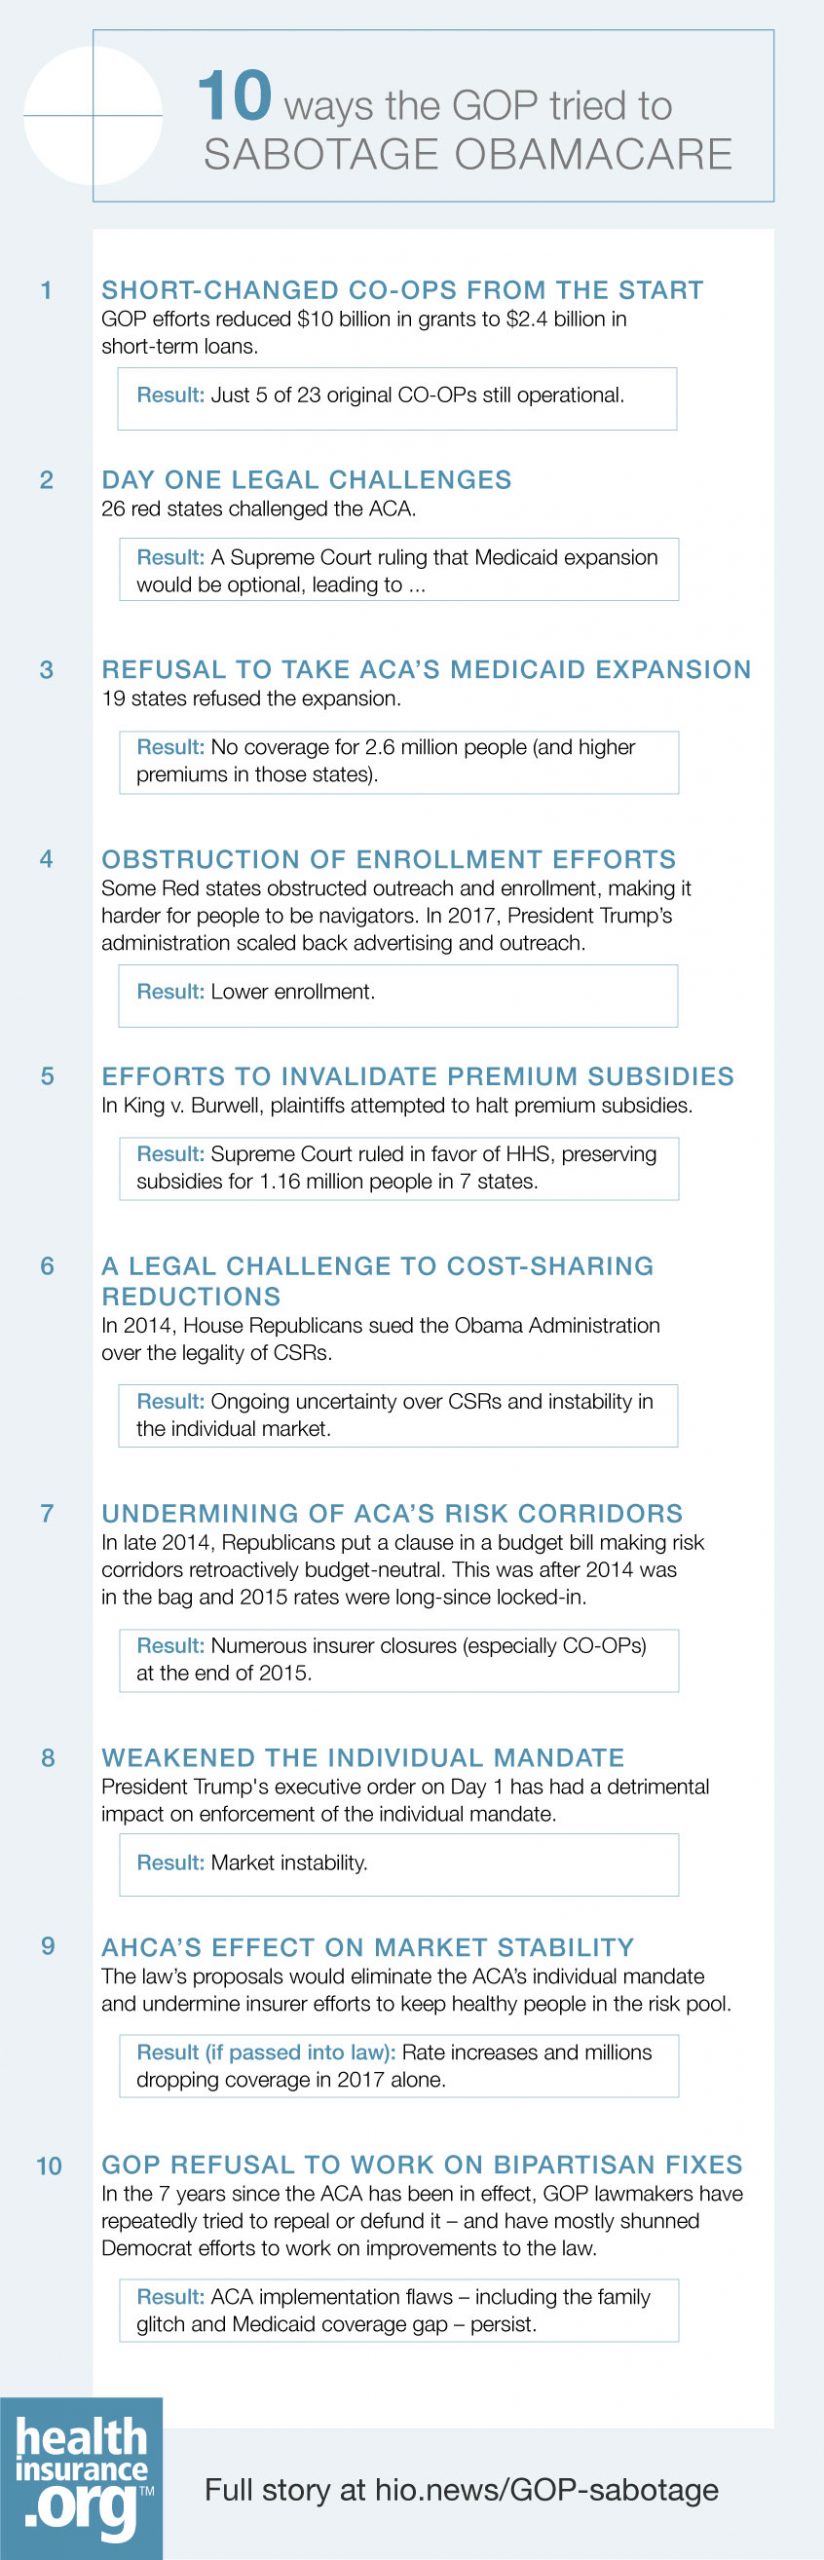 10 ways the GOP sabotaged Obamacare